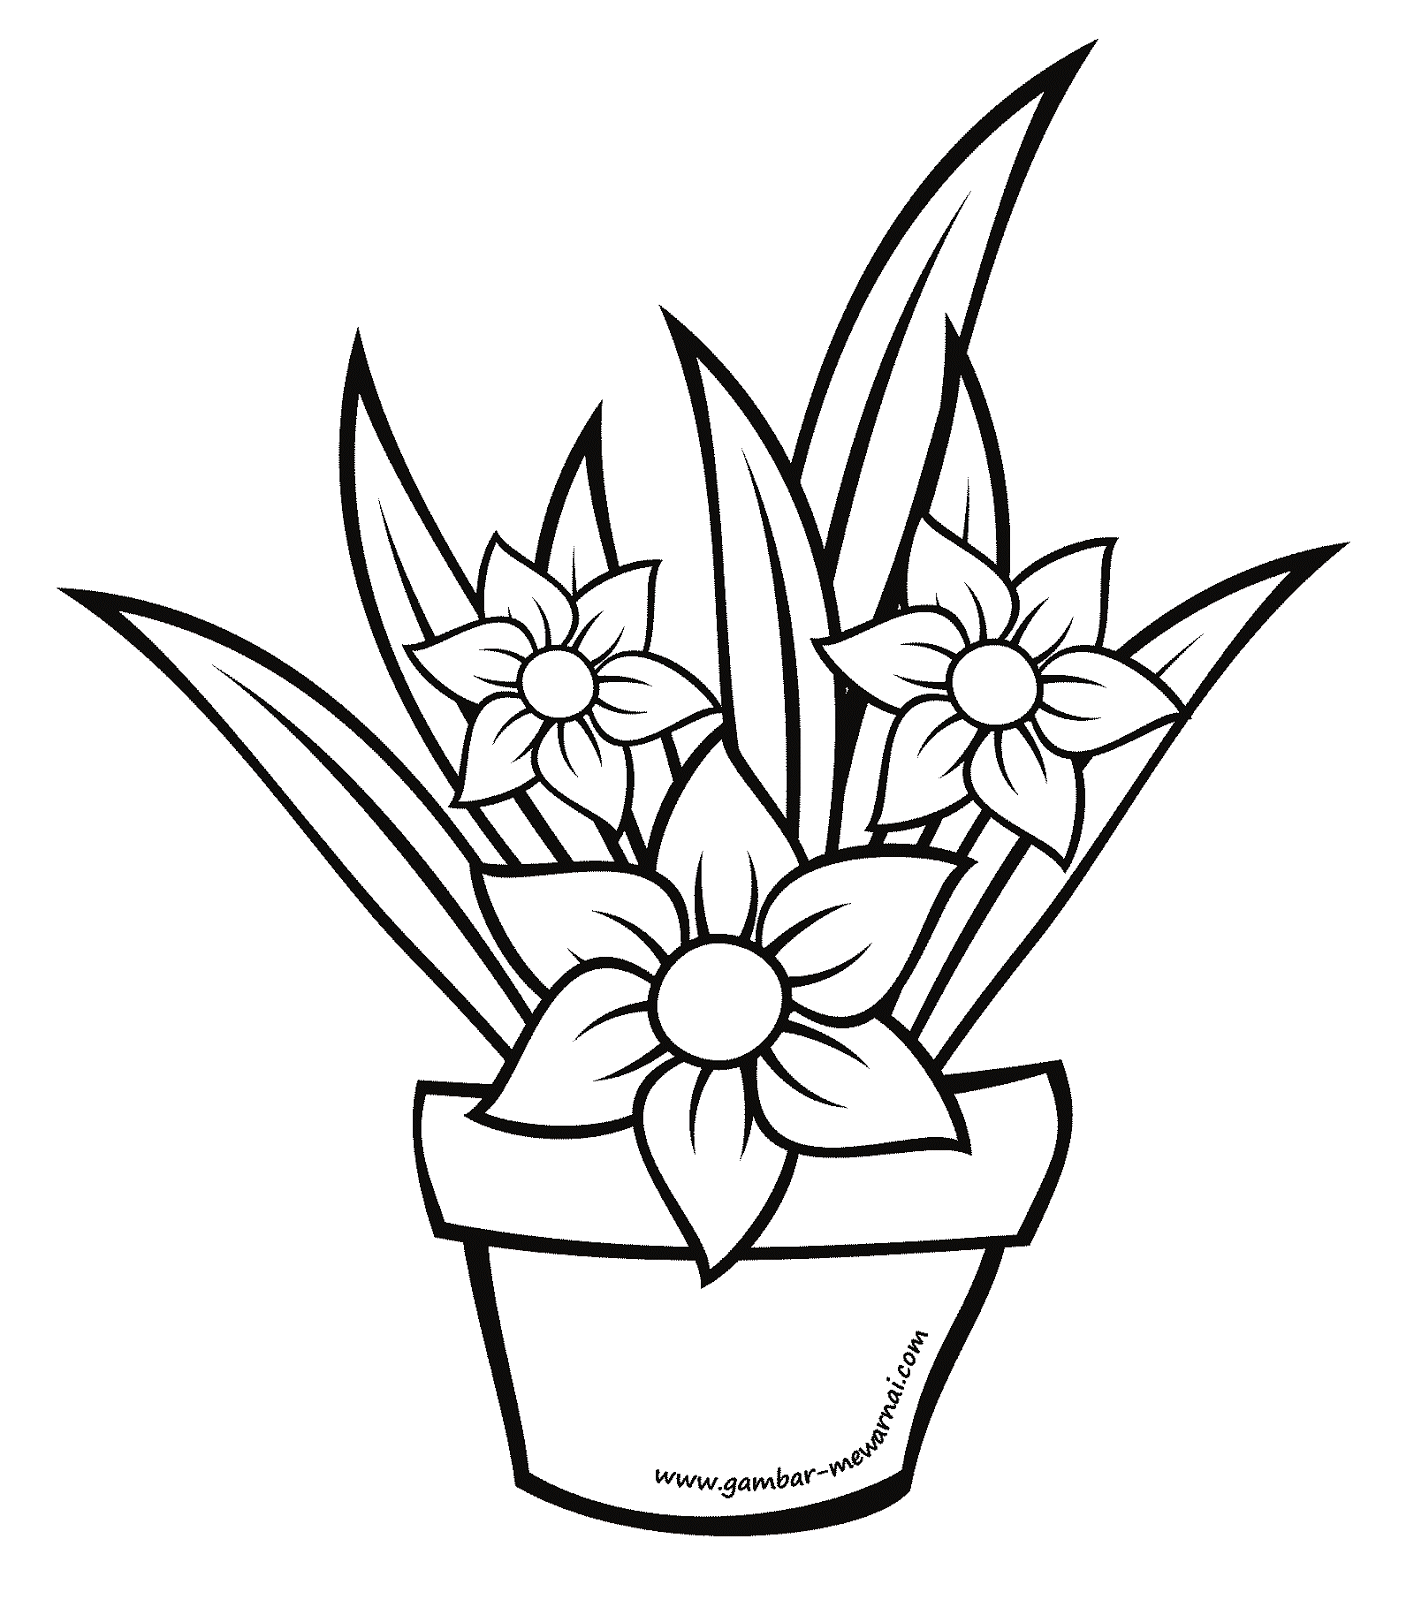 gambar sketsa bunga kamboja hd